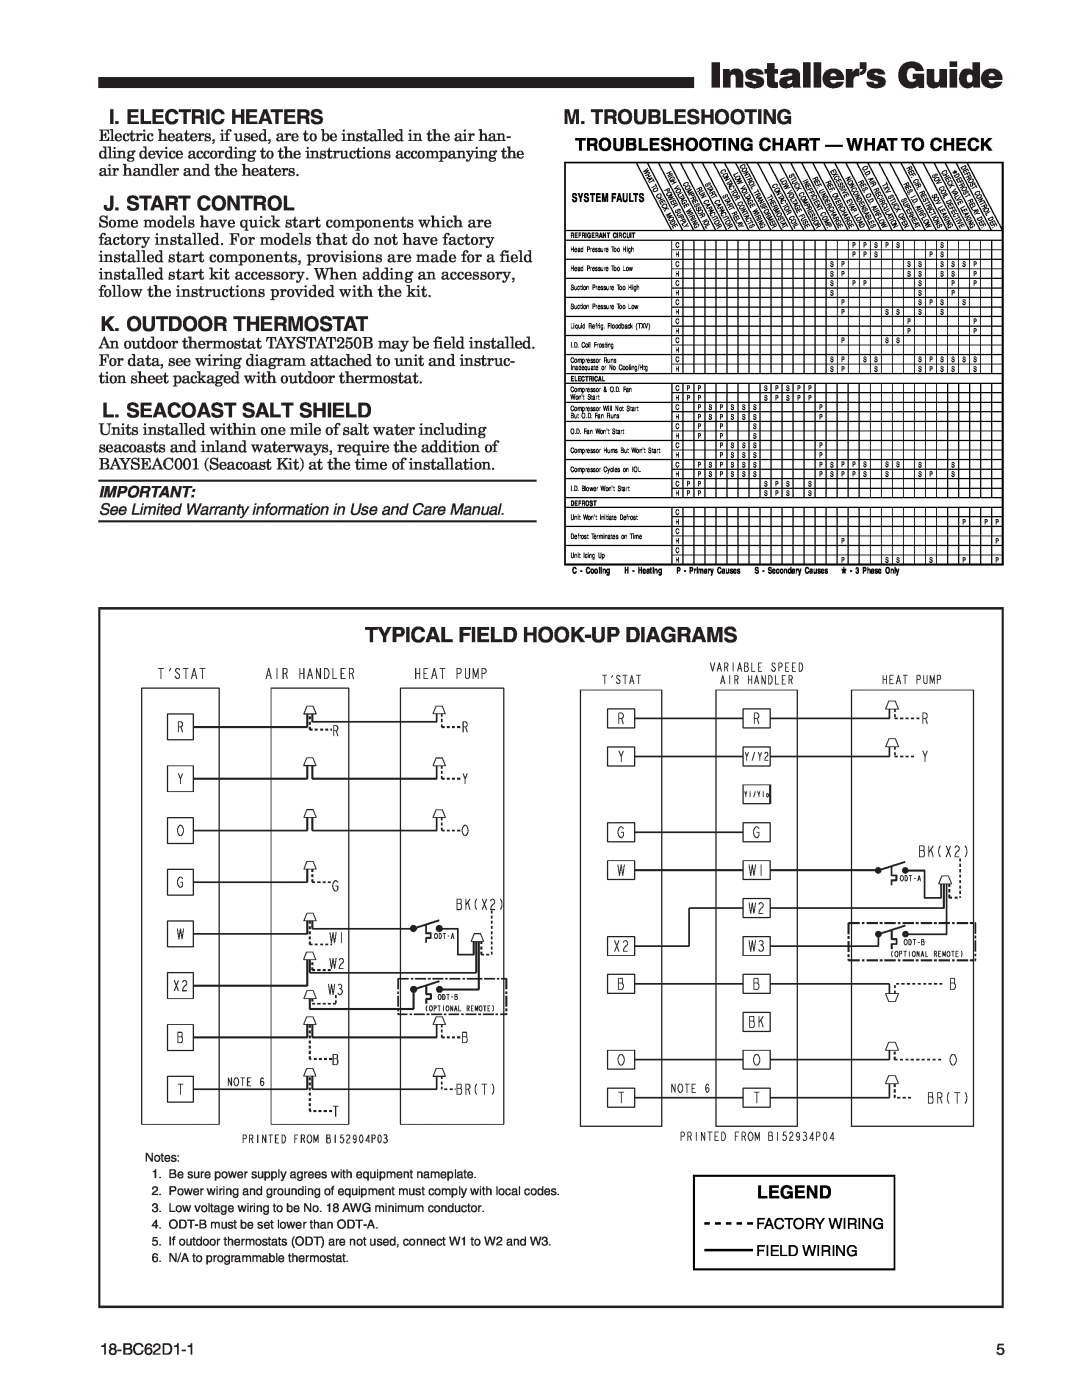 Trane 4TWA3 manual Installer’s Guide, I. Electric Heaters, J. Start Control, K. Outdoor Thermostat, L. Seacoast Salt Shield 